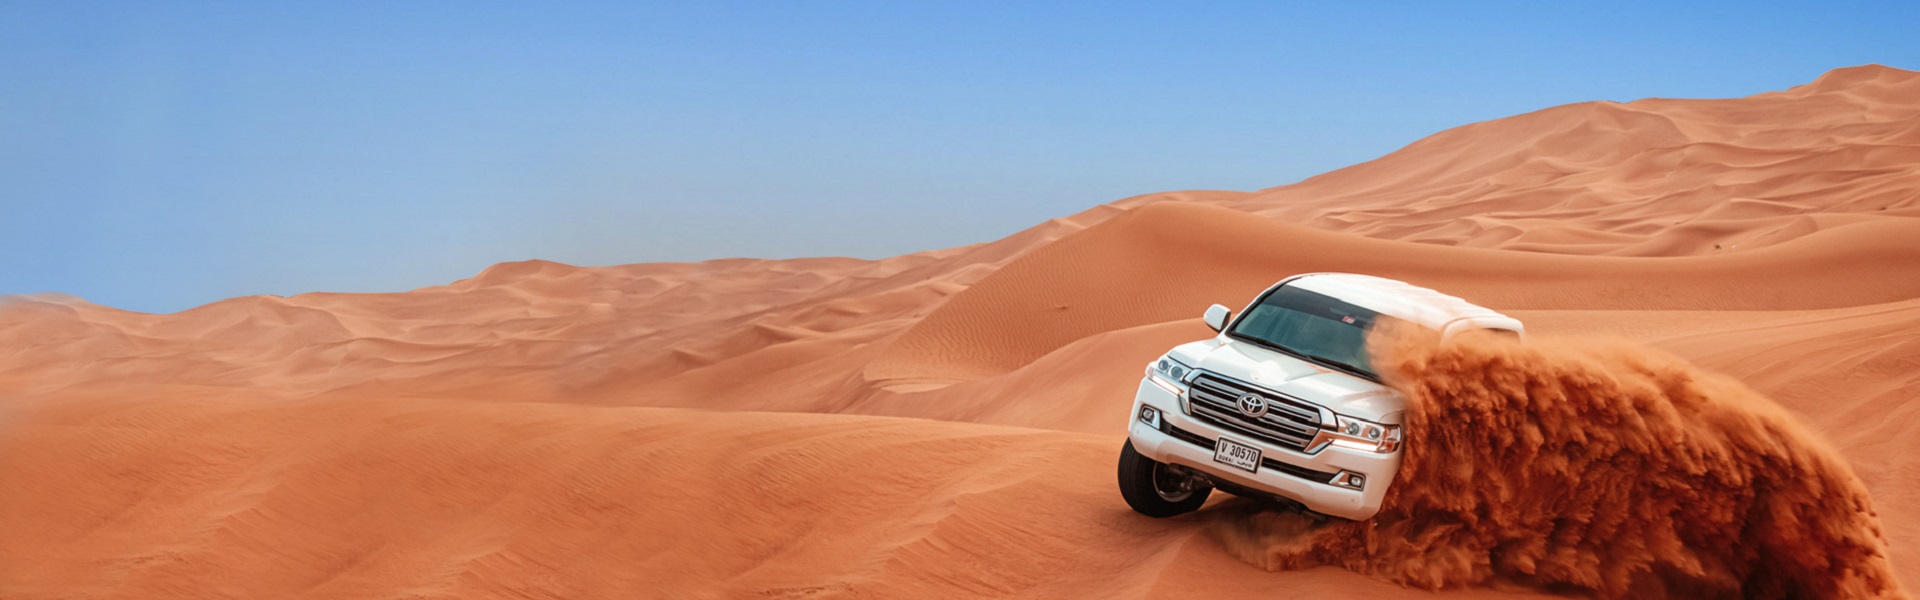 Rent a car Beograd | Desert safari in Dubai